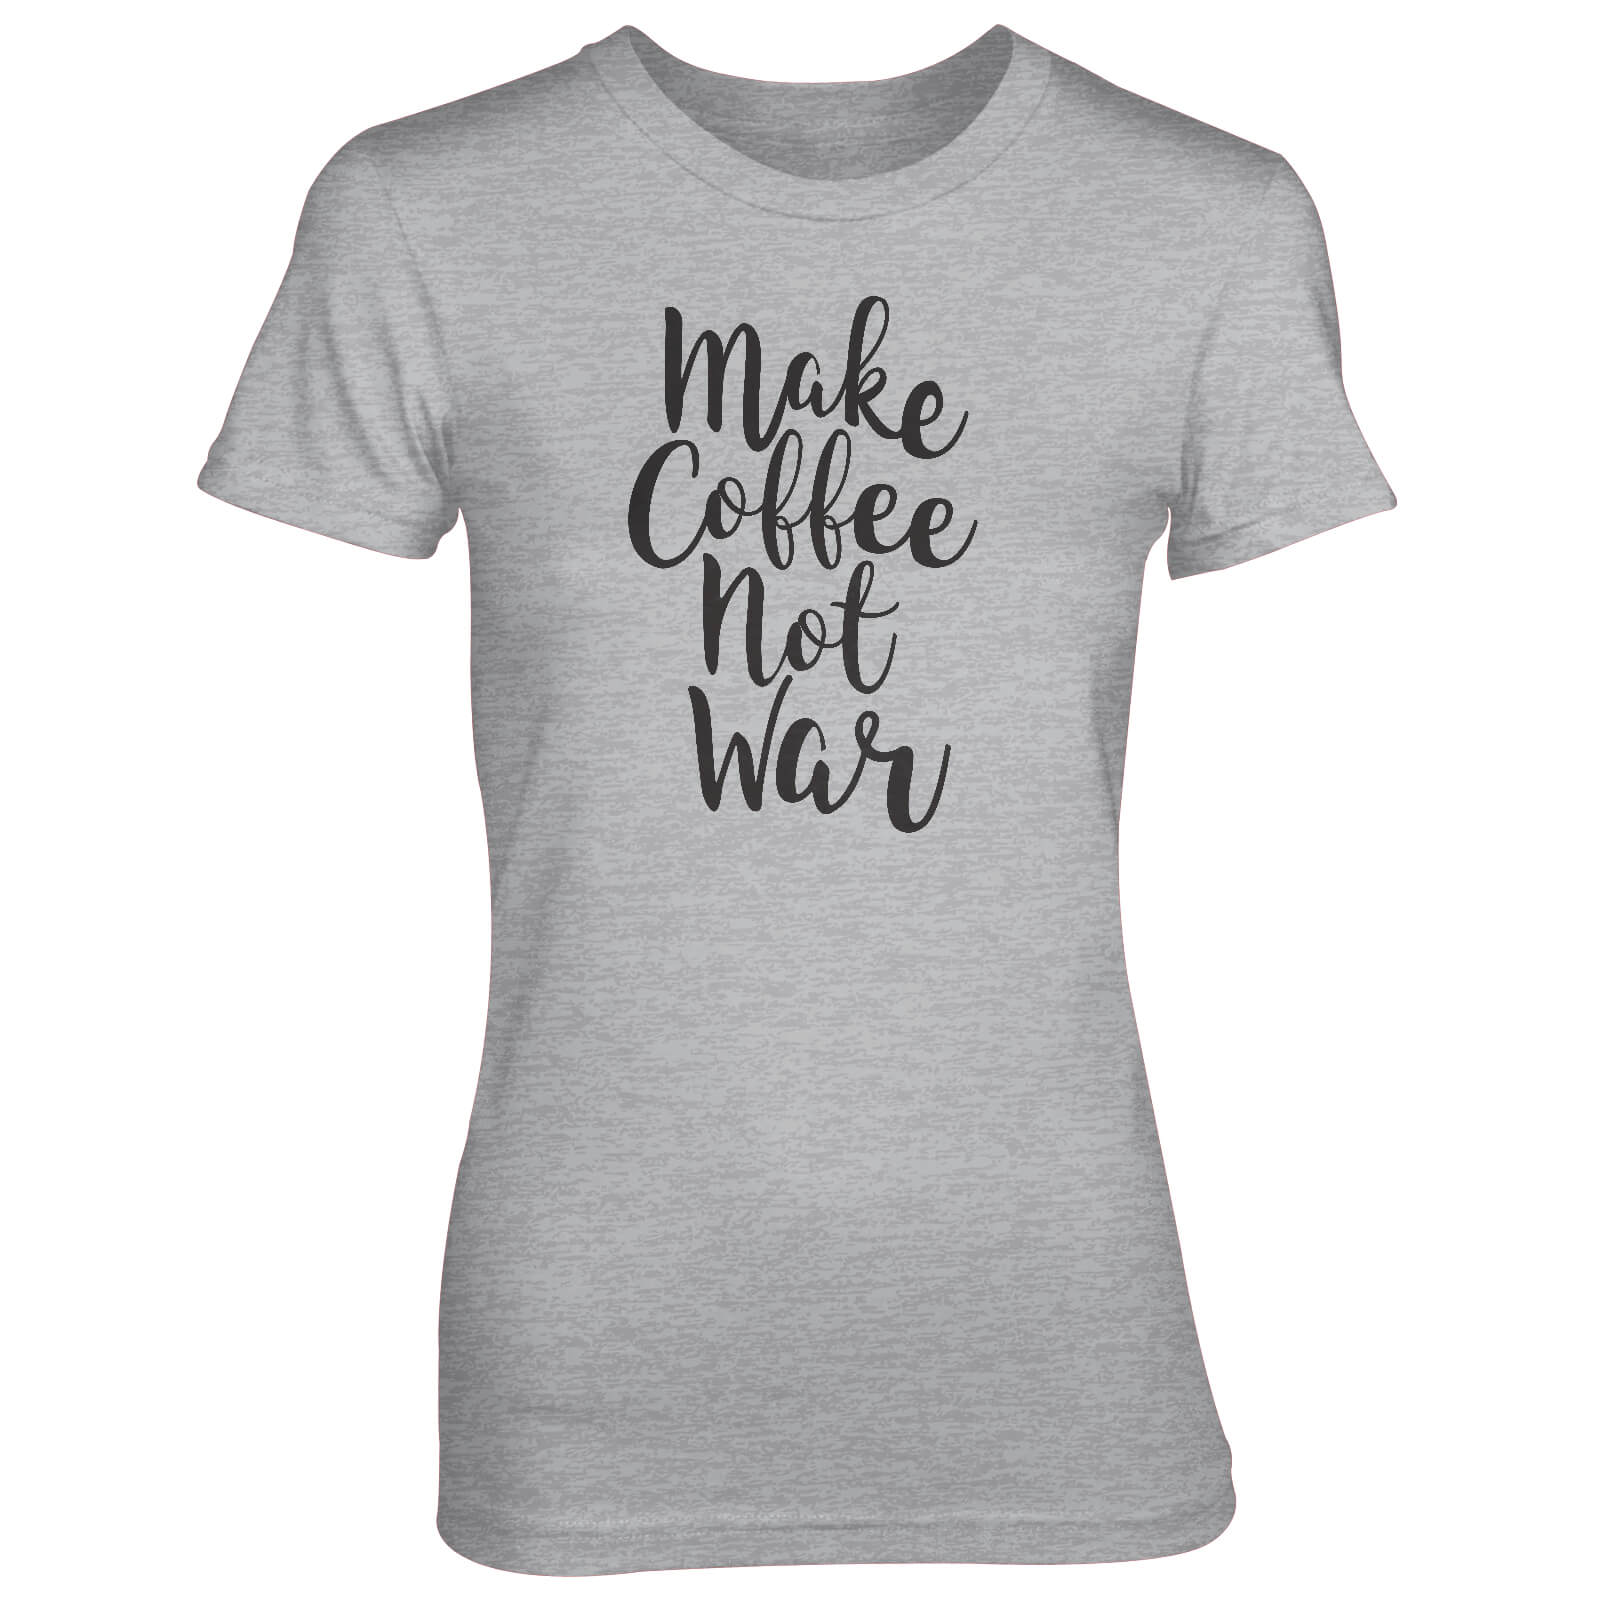 Make Coffee Not War Women's Grey T-Shirt - M - Grey